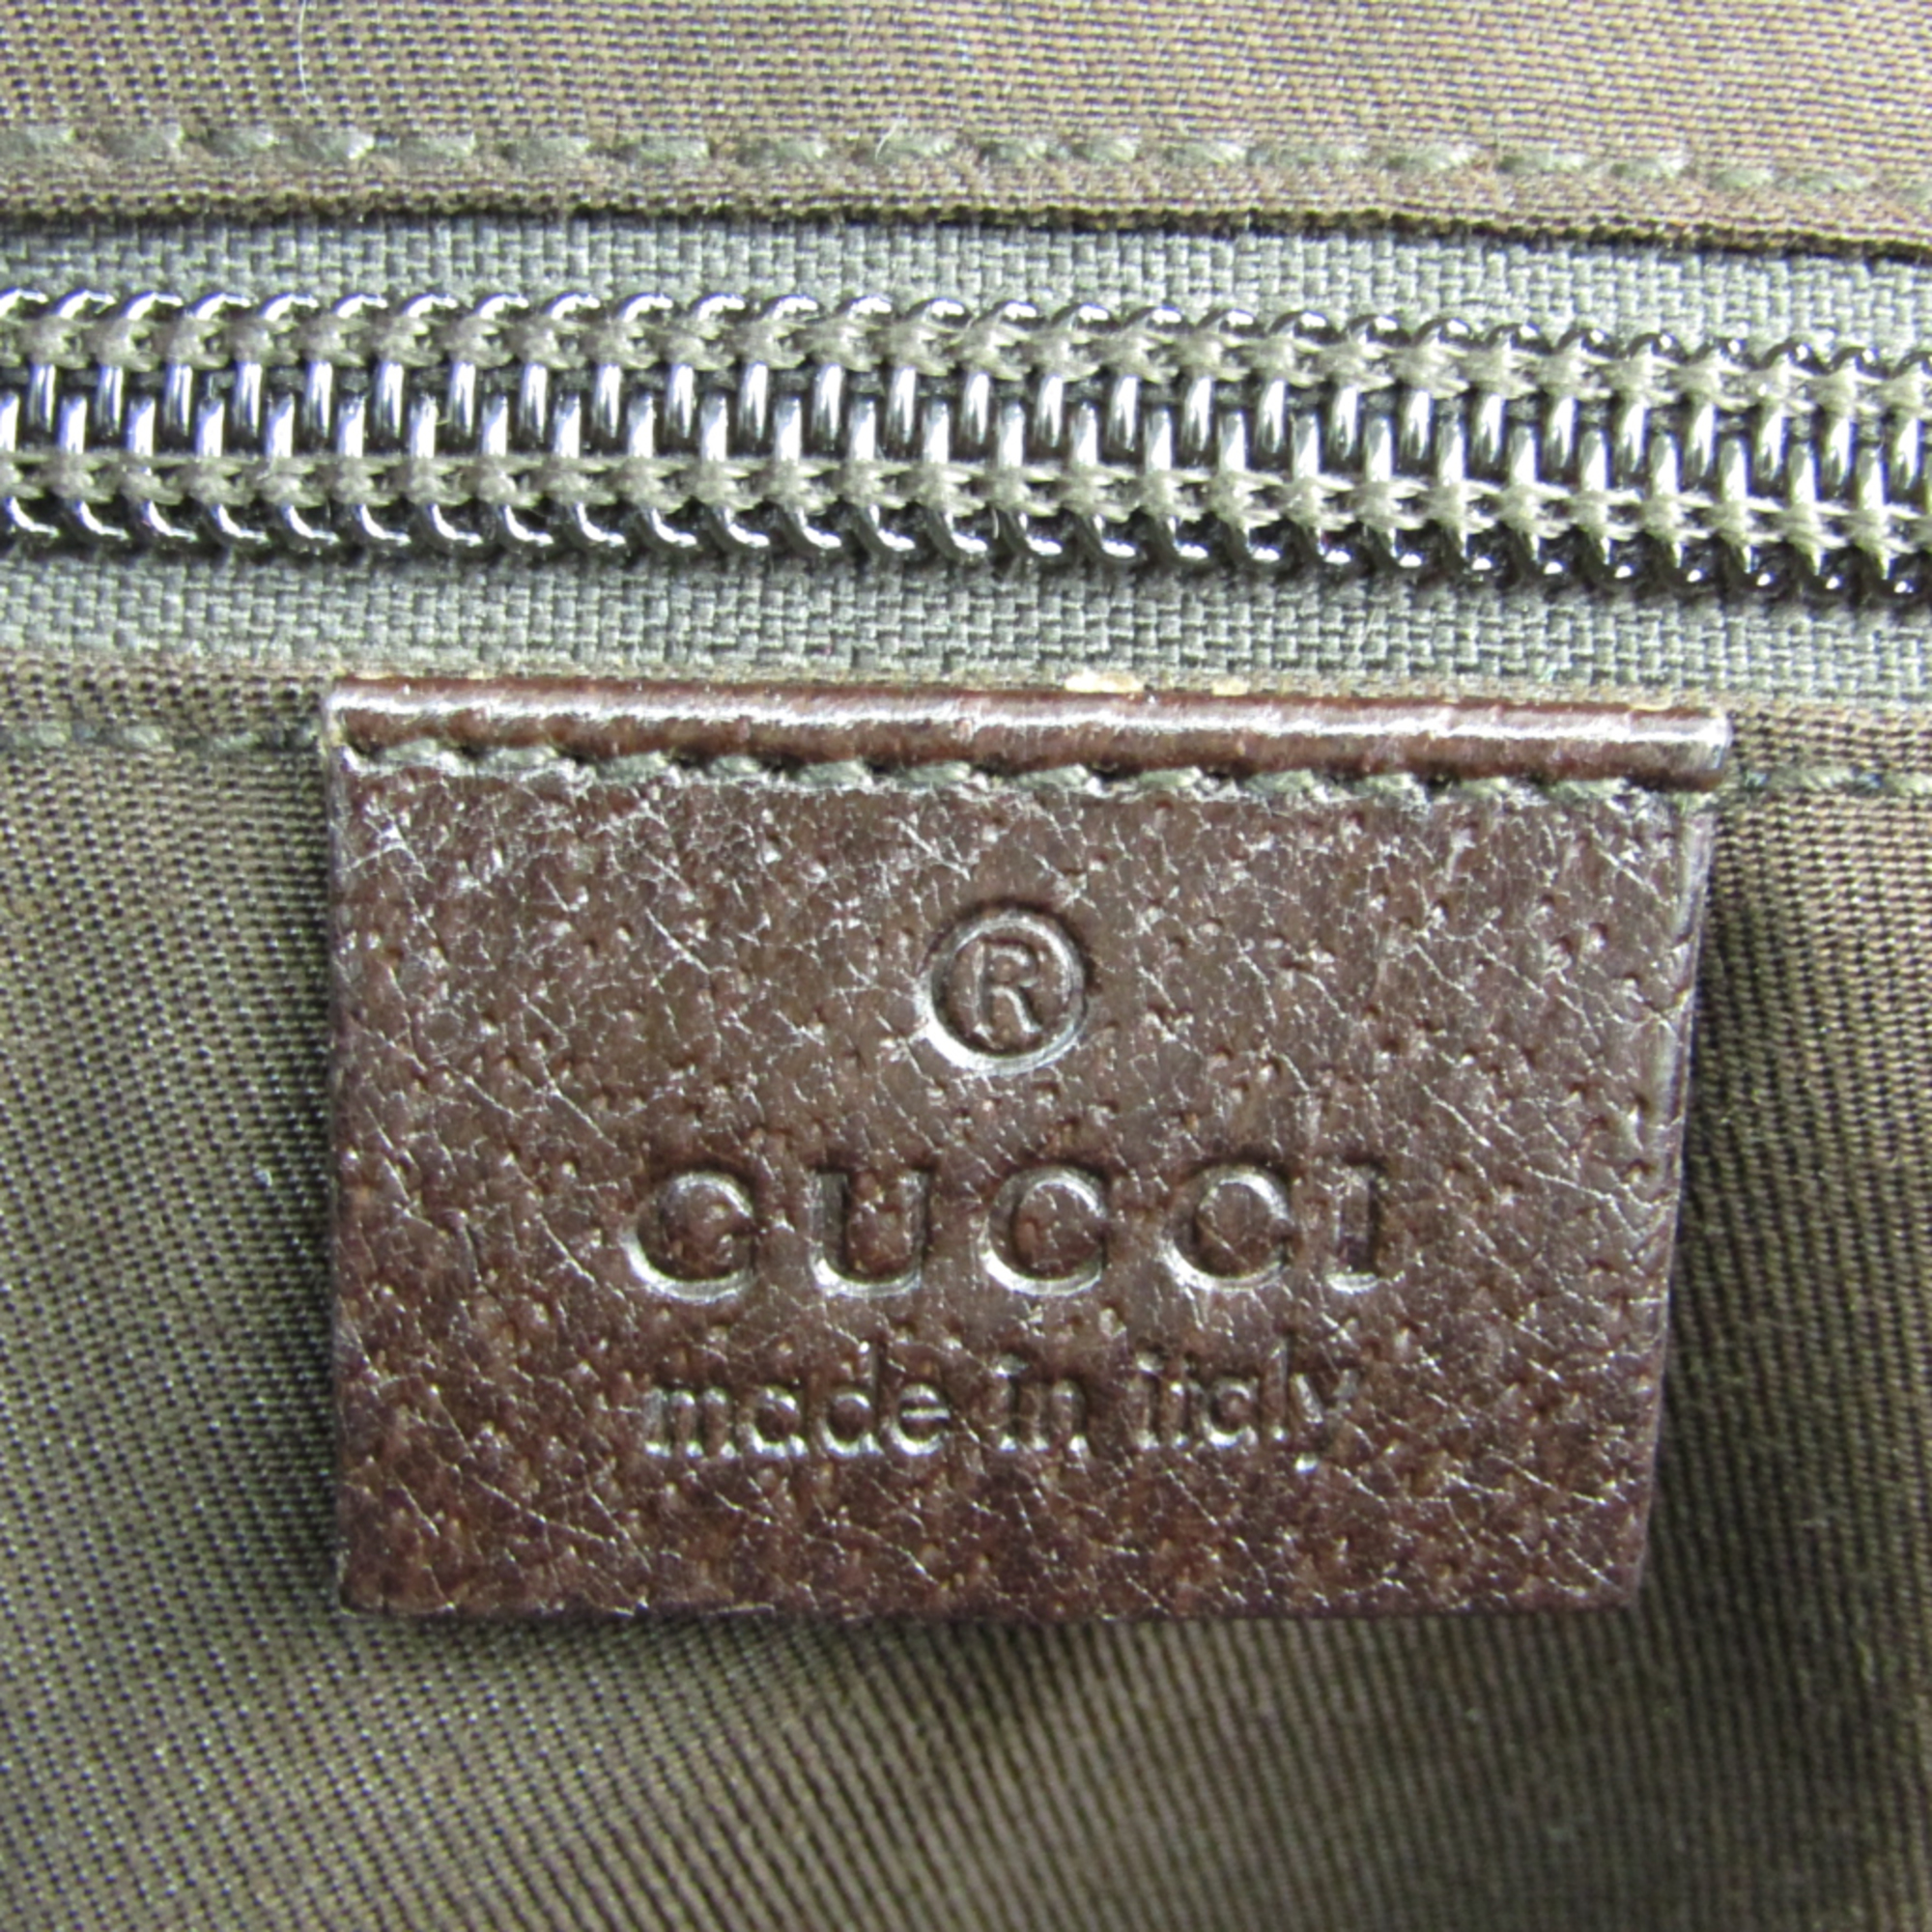 Gucci GG Canvas 181092 Unisex GG Canvas,Leather Shoulder Bag Beige,Dark Brown,Green,Red Color